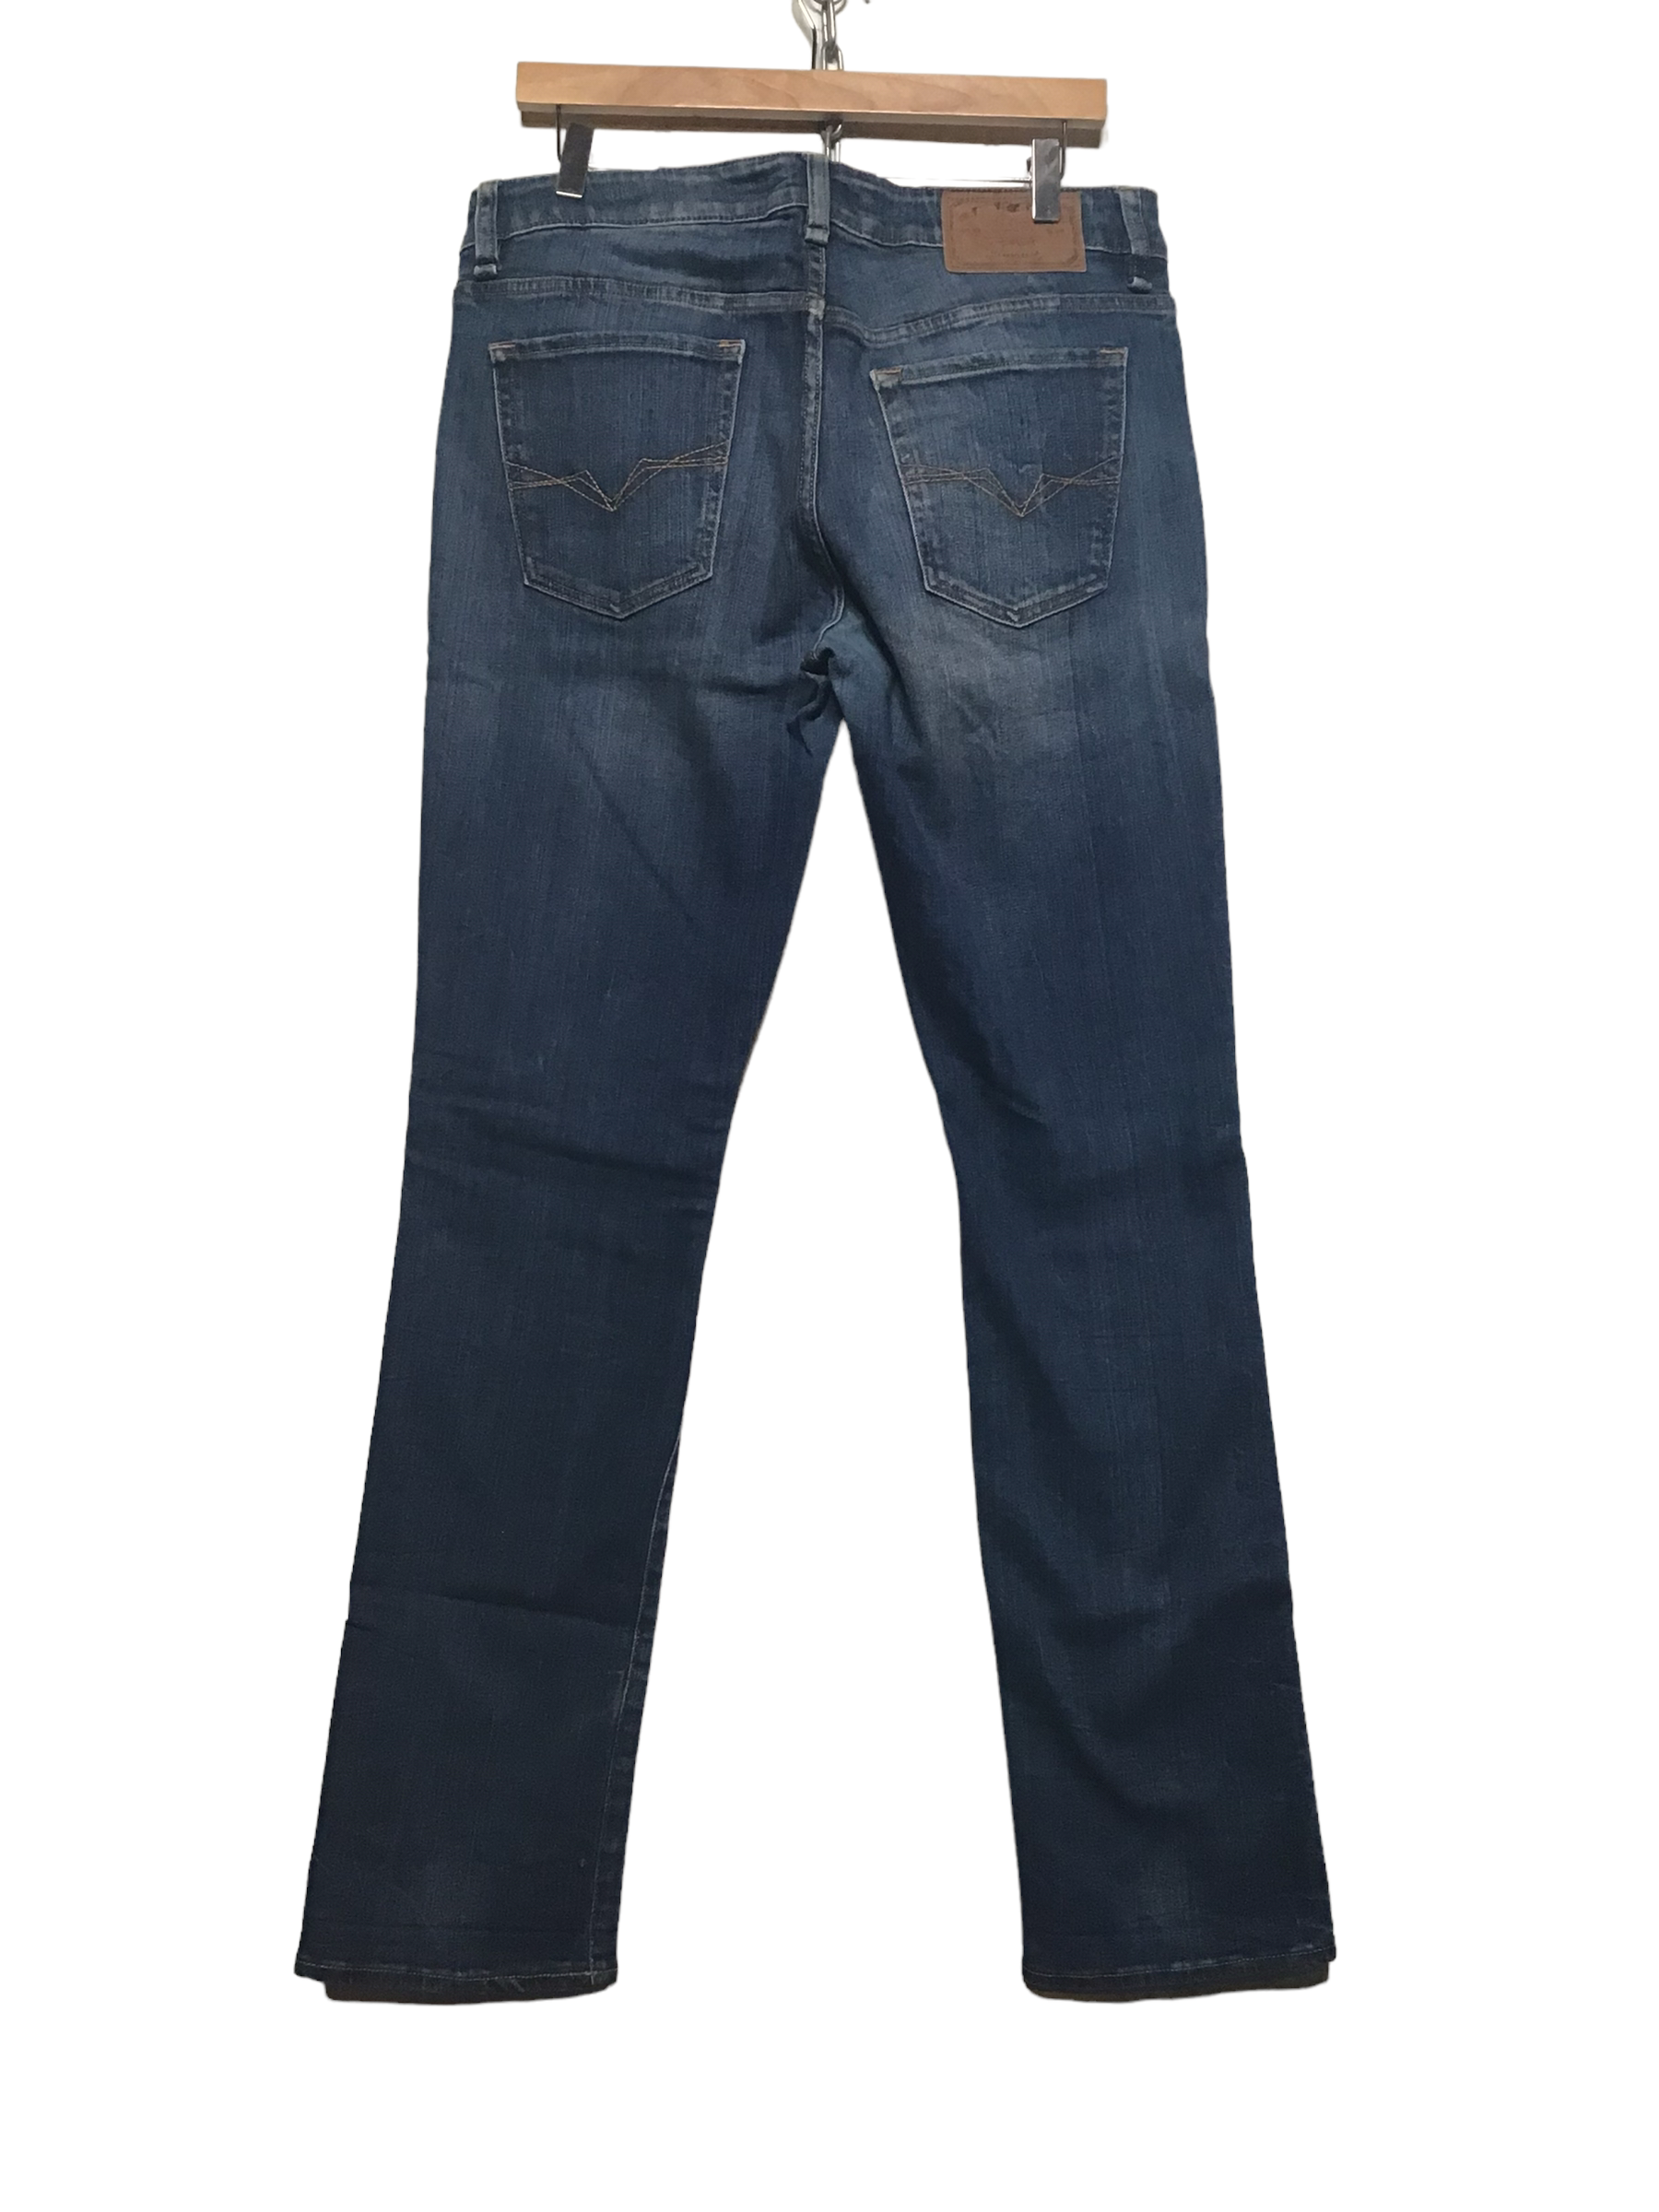 Guess Skinny Fit Jeans (35X32) – Loft 68 Vintage